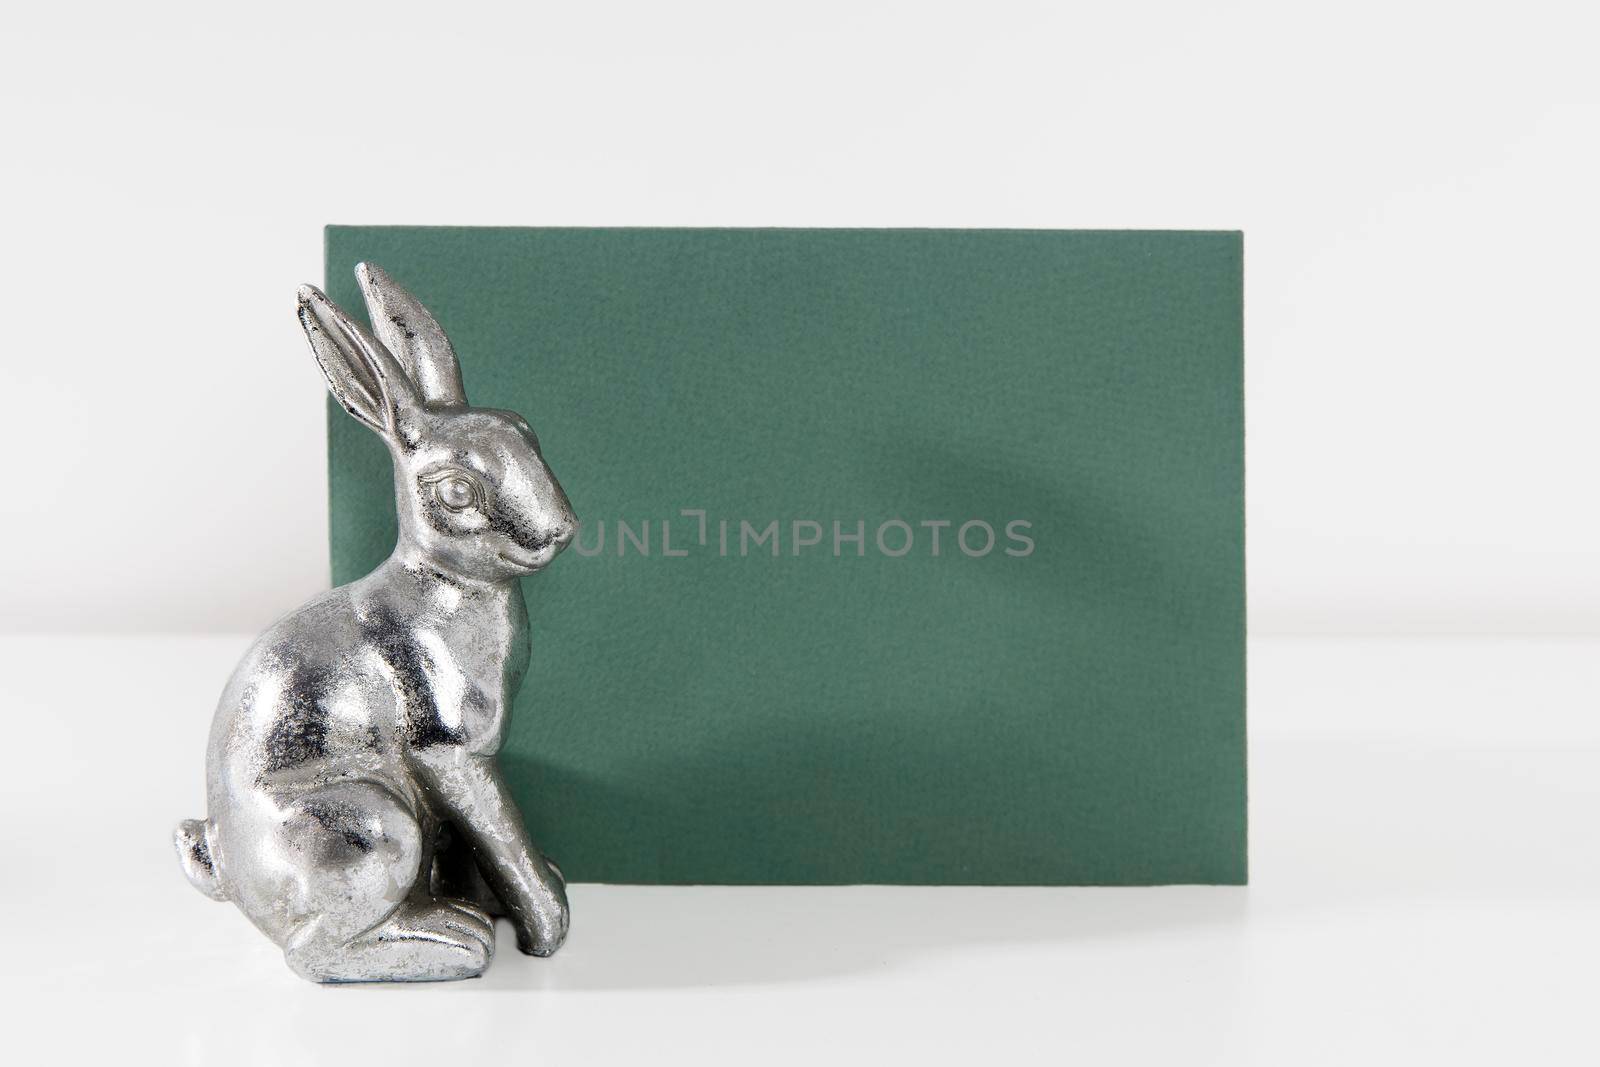 Mock up white frame with modern ceramic easter bunny decor with green card on a shelf. White color scheme. Landscape frame orientation.